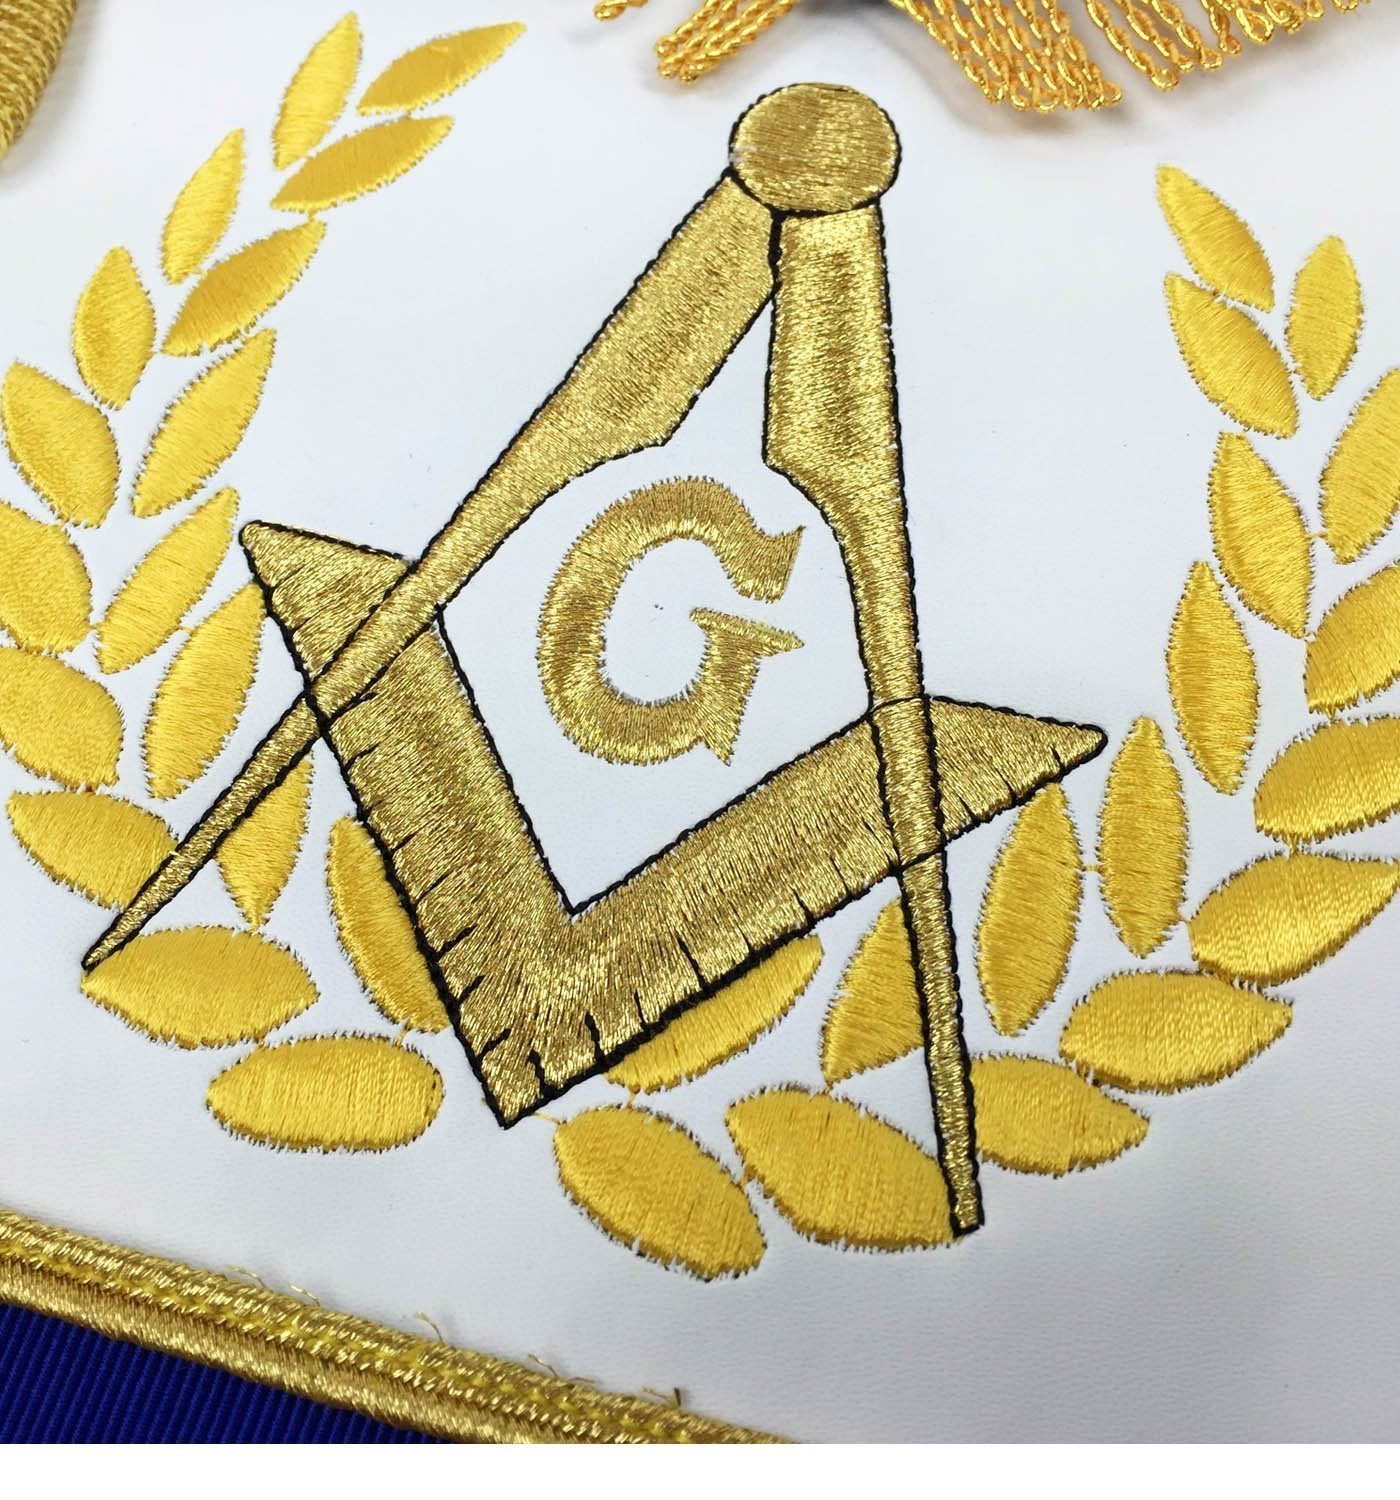 Master Mason Blue Lodge Regalia Set - Royal Blue & Gold Machine Embroidery - Bricks Masons